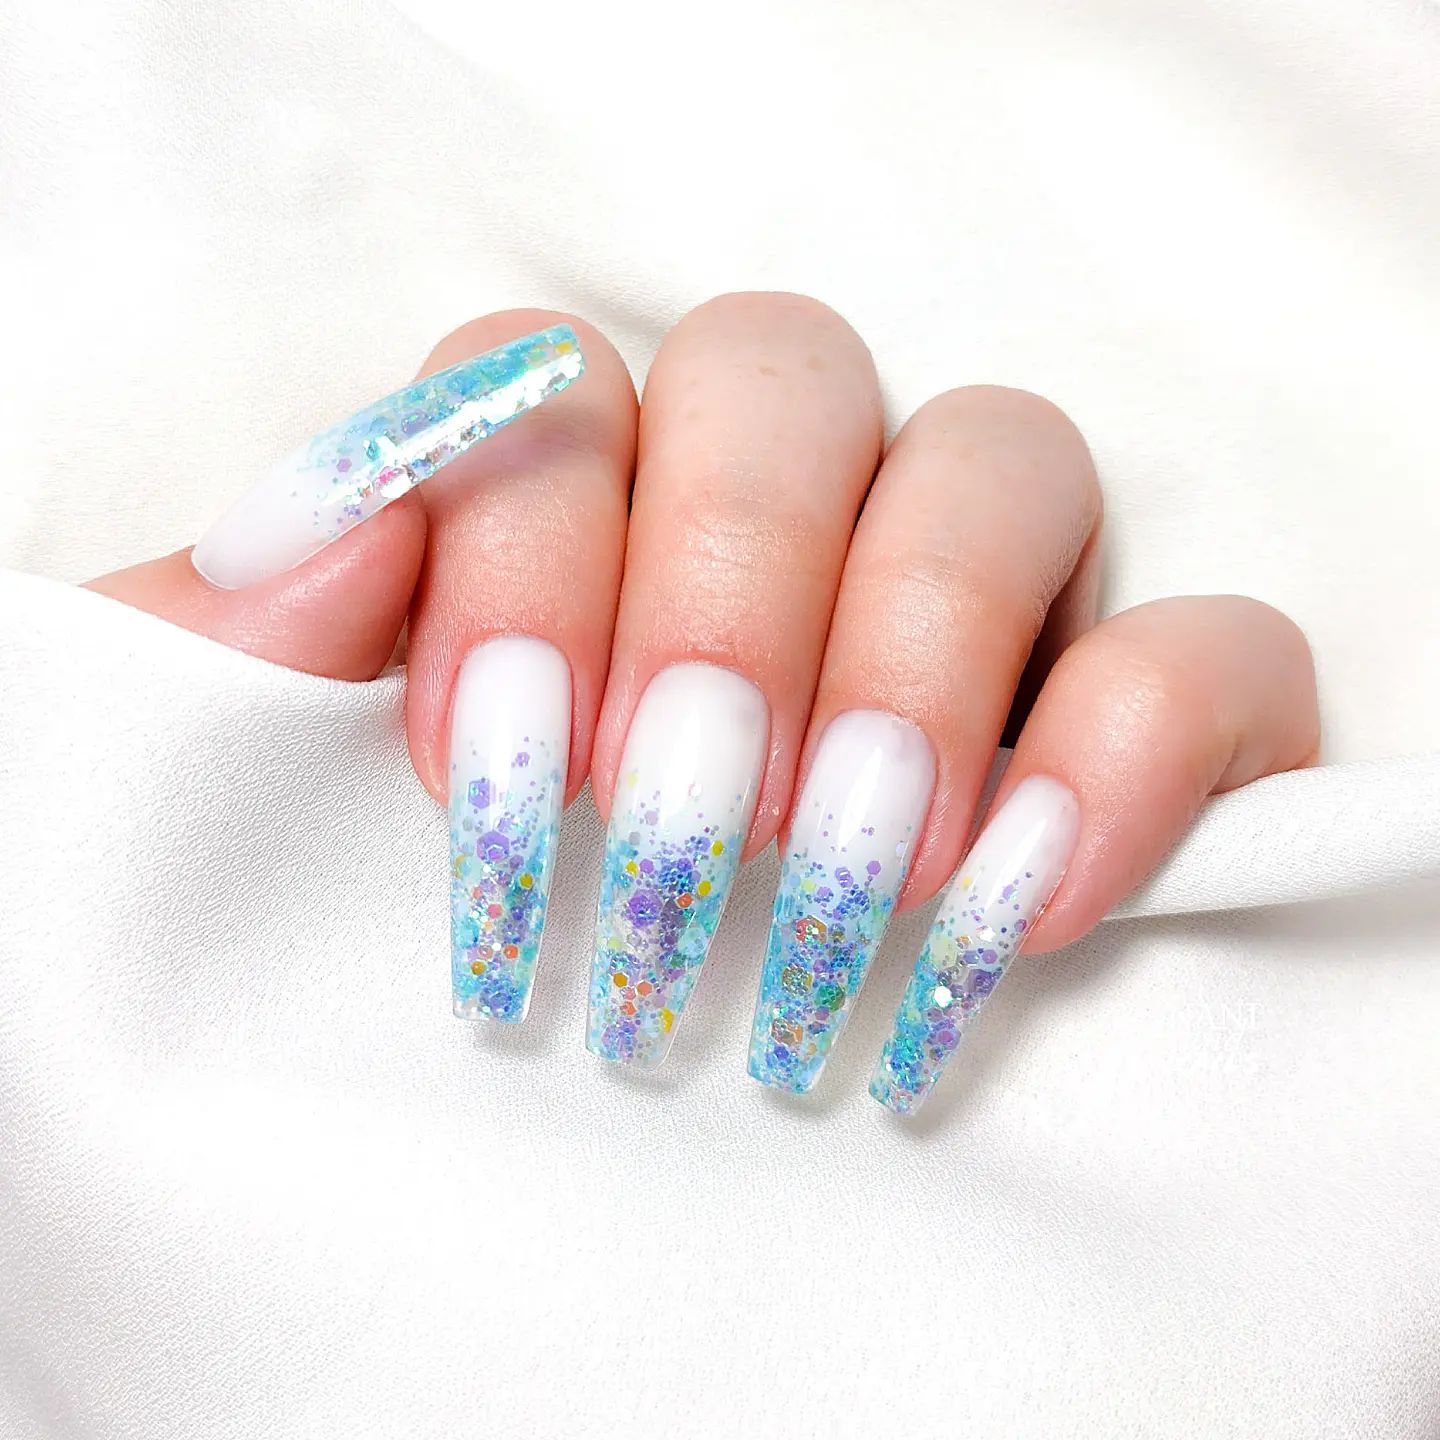 Witte nagels met blauwe glitter